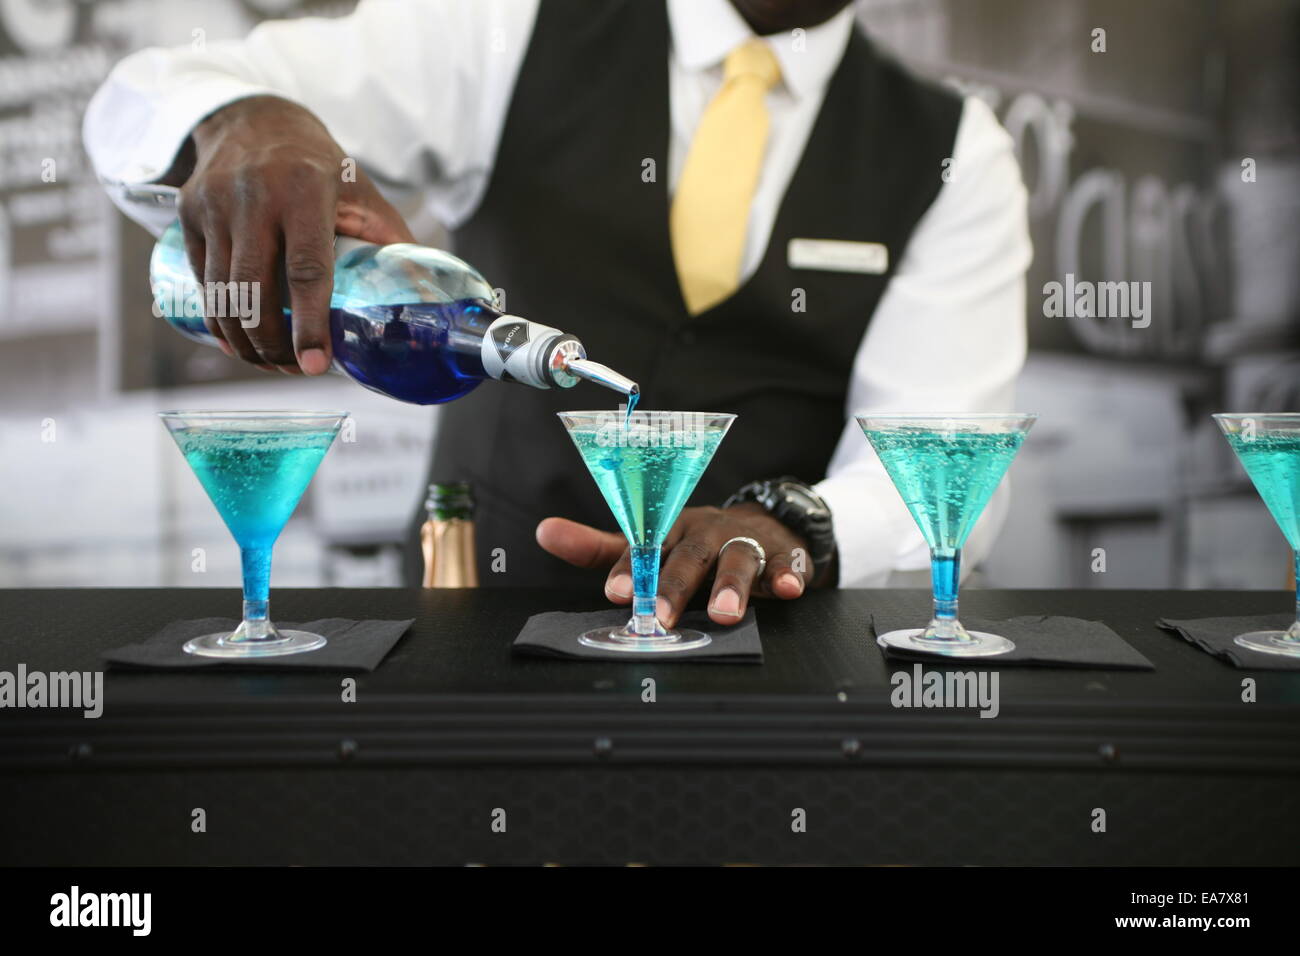 barman-making-cocktails-EA7X81.jpg